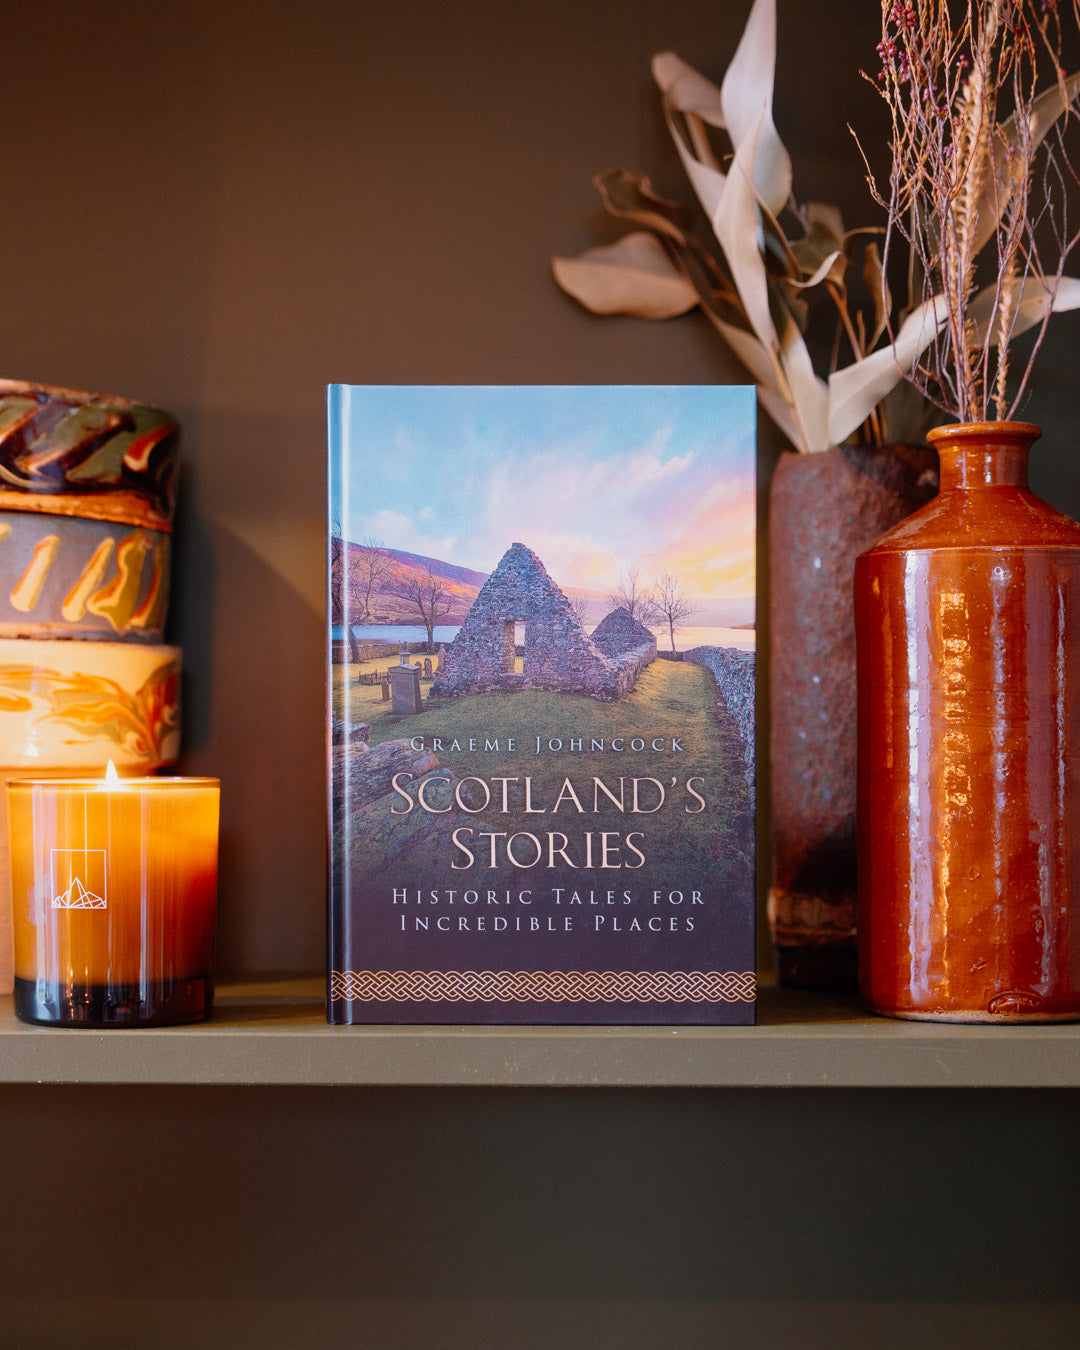 Scotland's Stories by Graeme Johncock